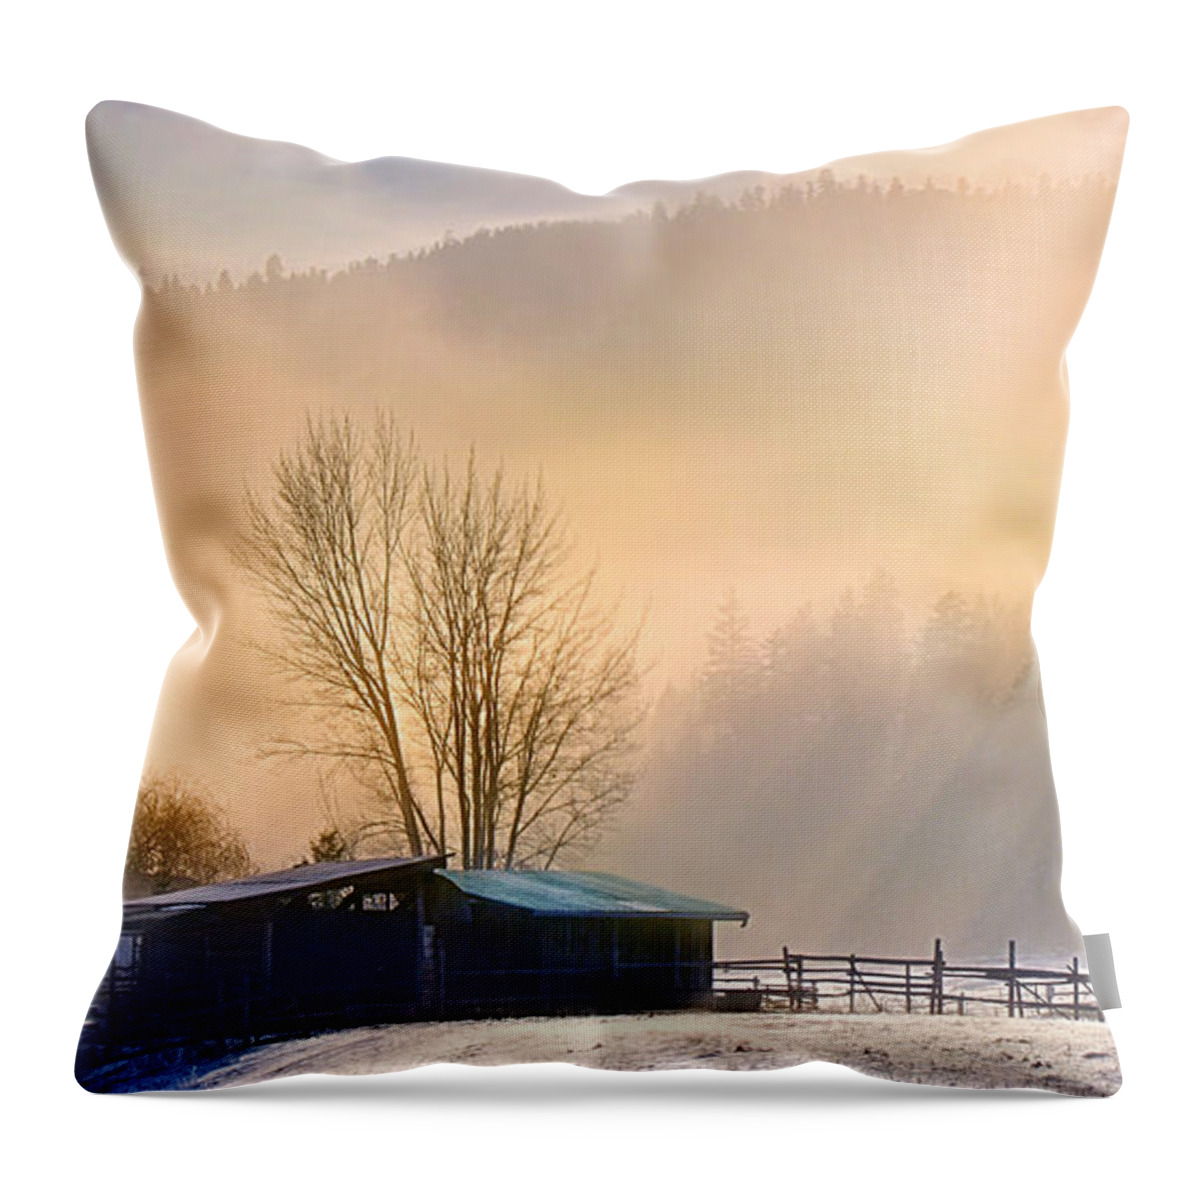 Okanagan Falls Throw Pillow featuring the photograph Morning Glory by John Poon